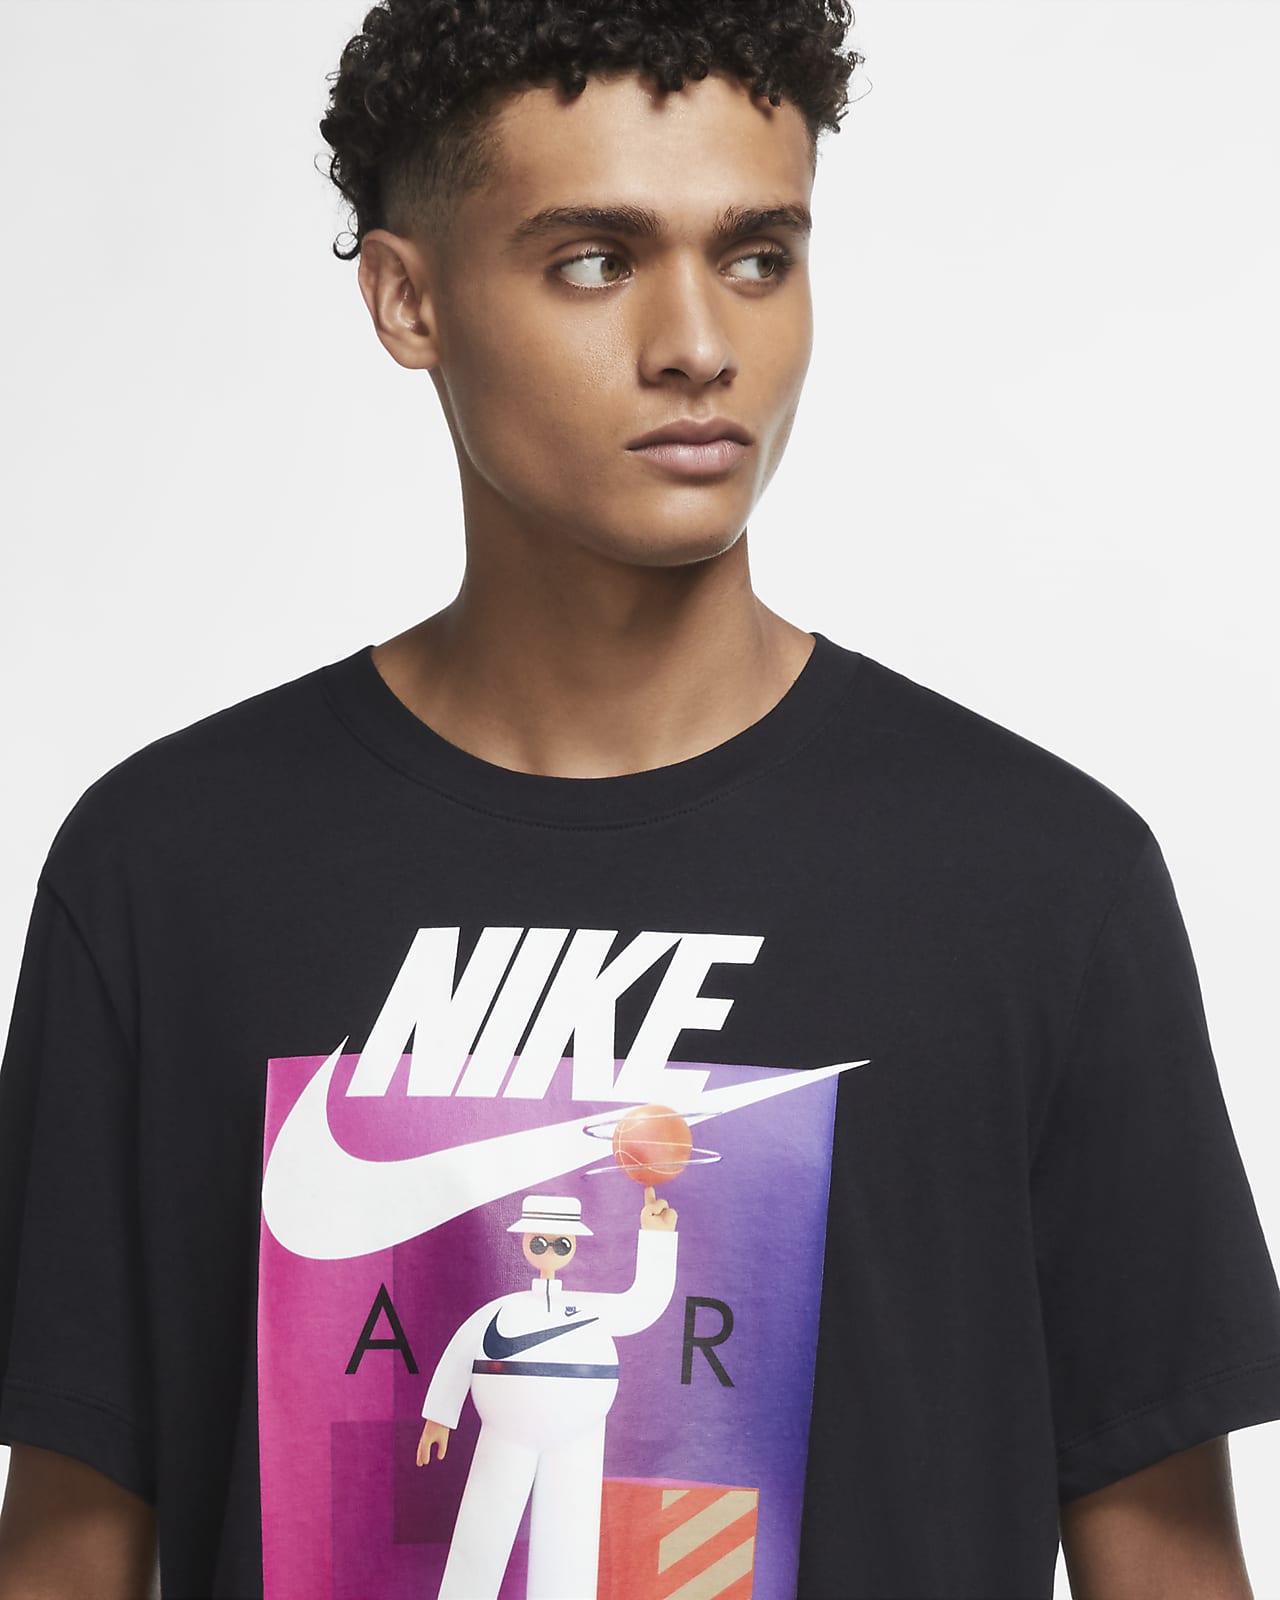 Buy > nike sportswear graphic t shirt > in stock